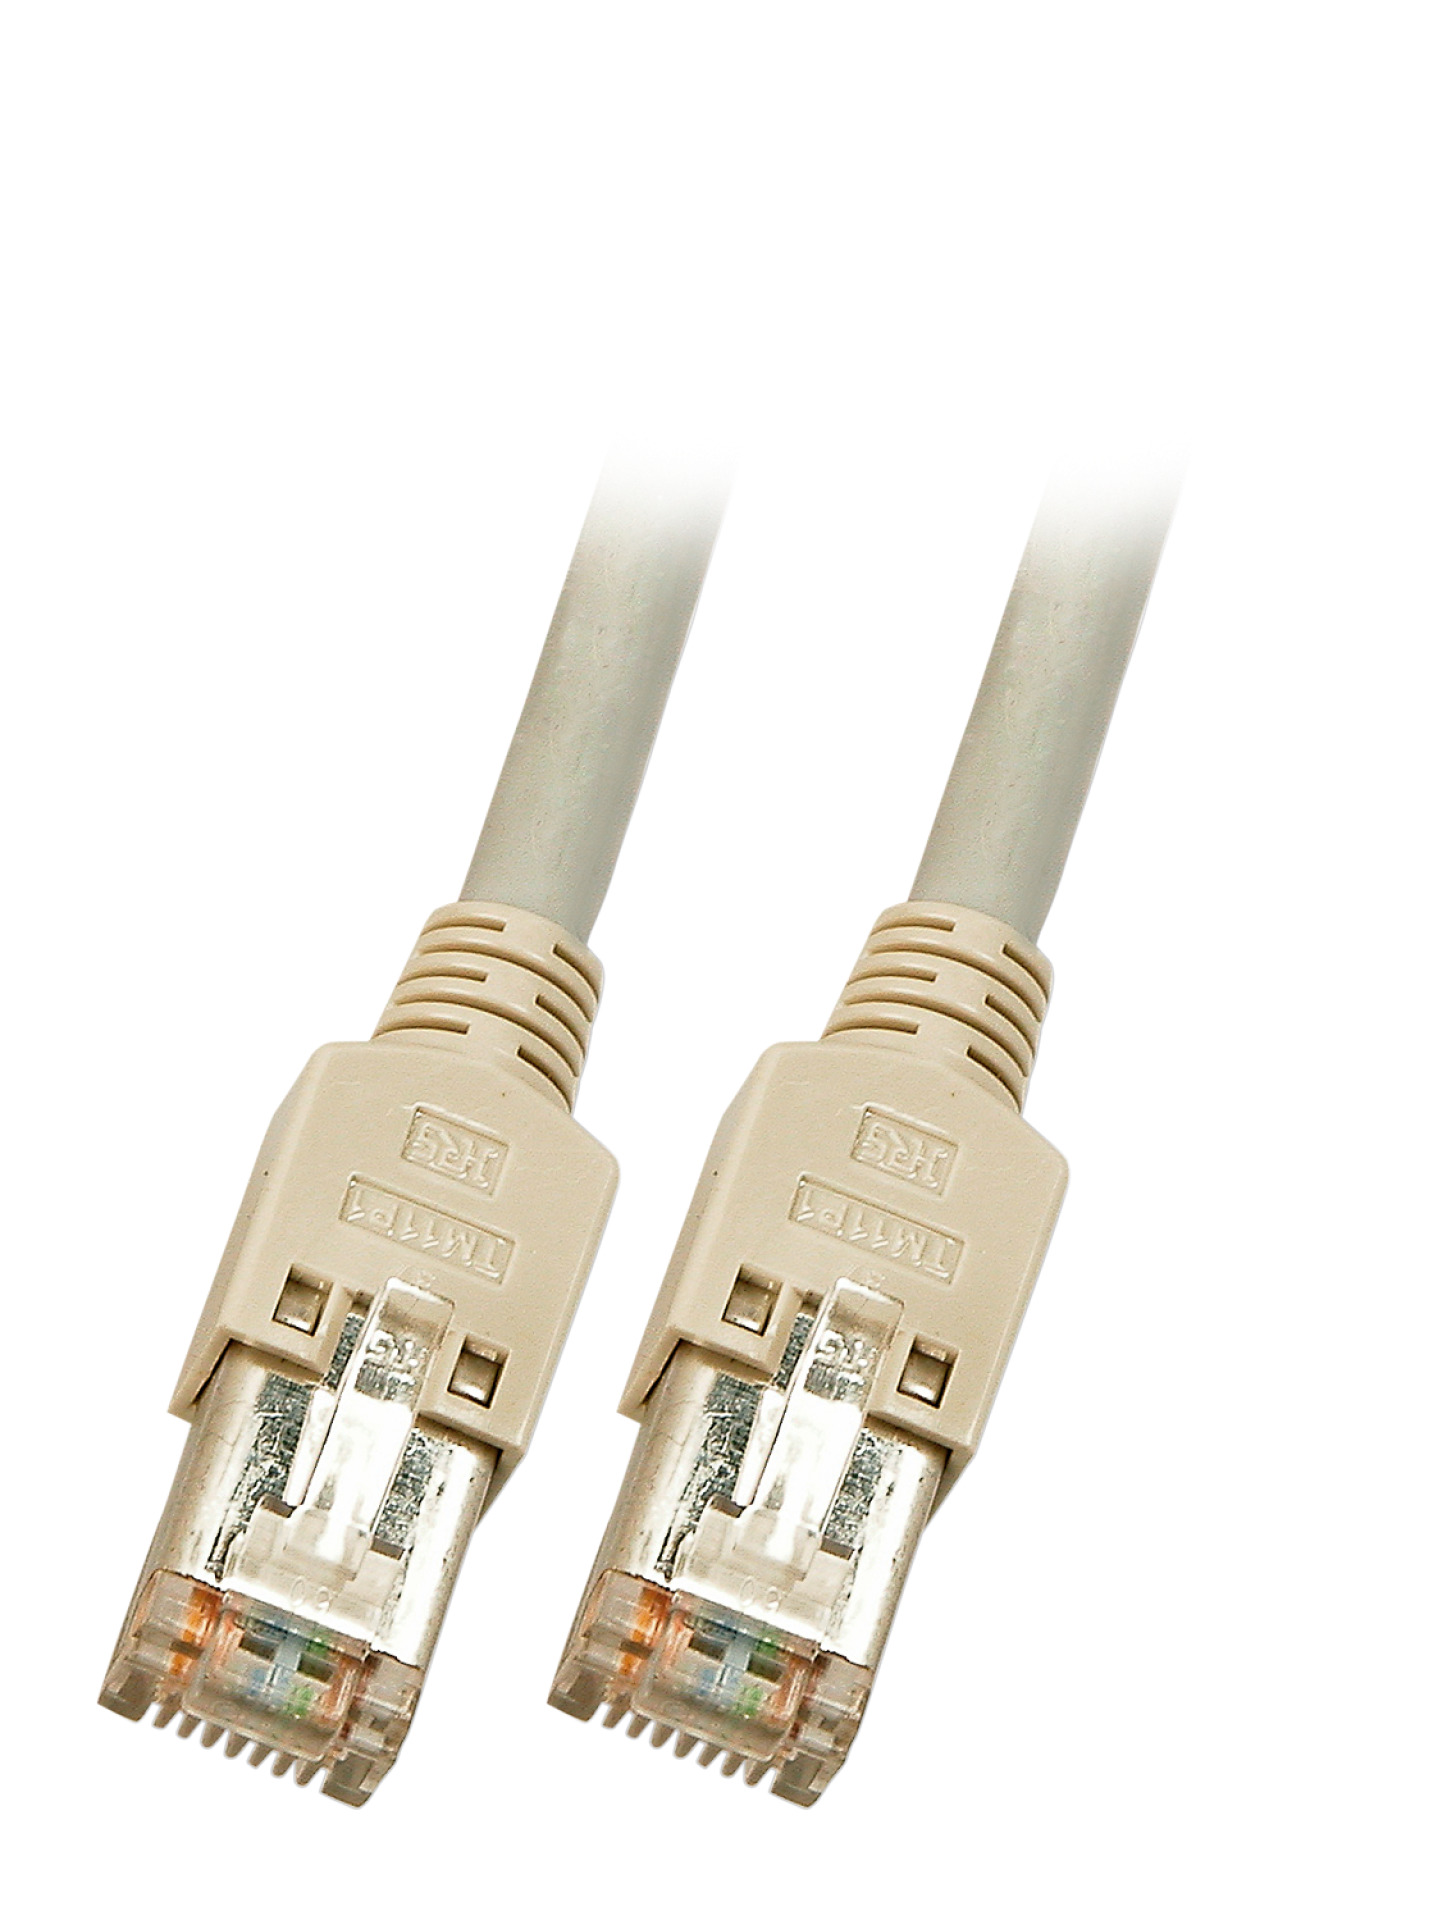 RJ45 Patch cable F/UTP, Cat.5e, TM11, UC300, 1,5m, grey